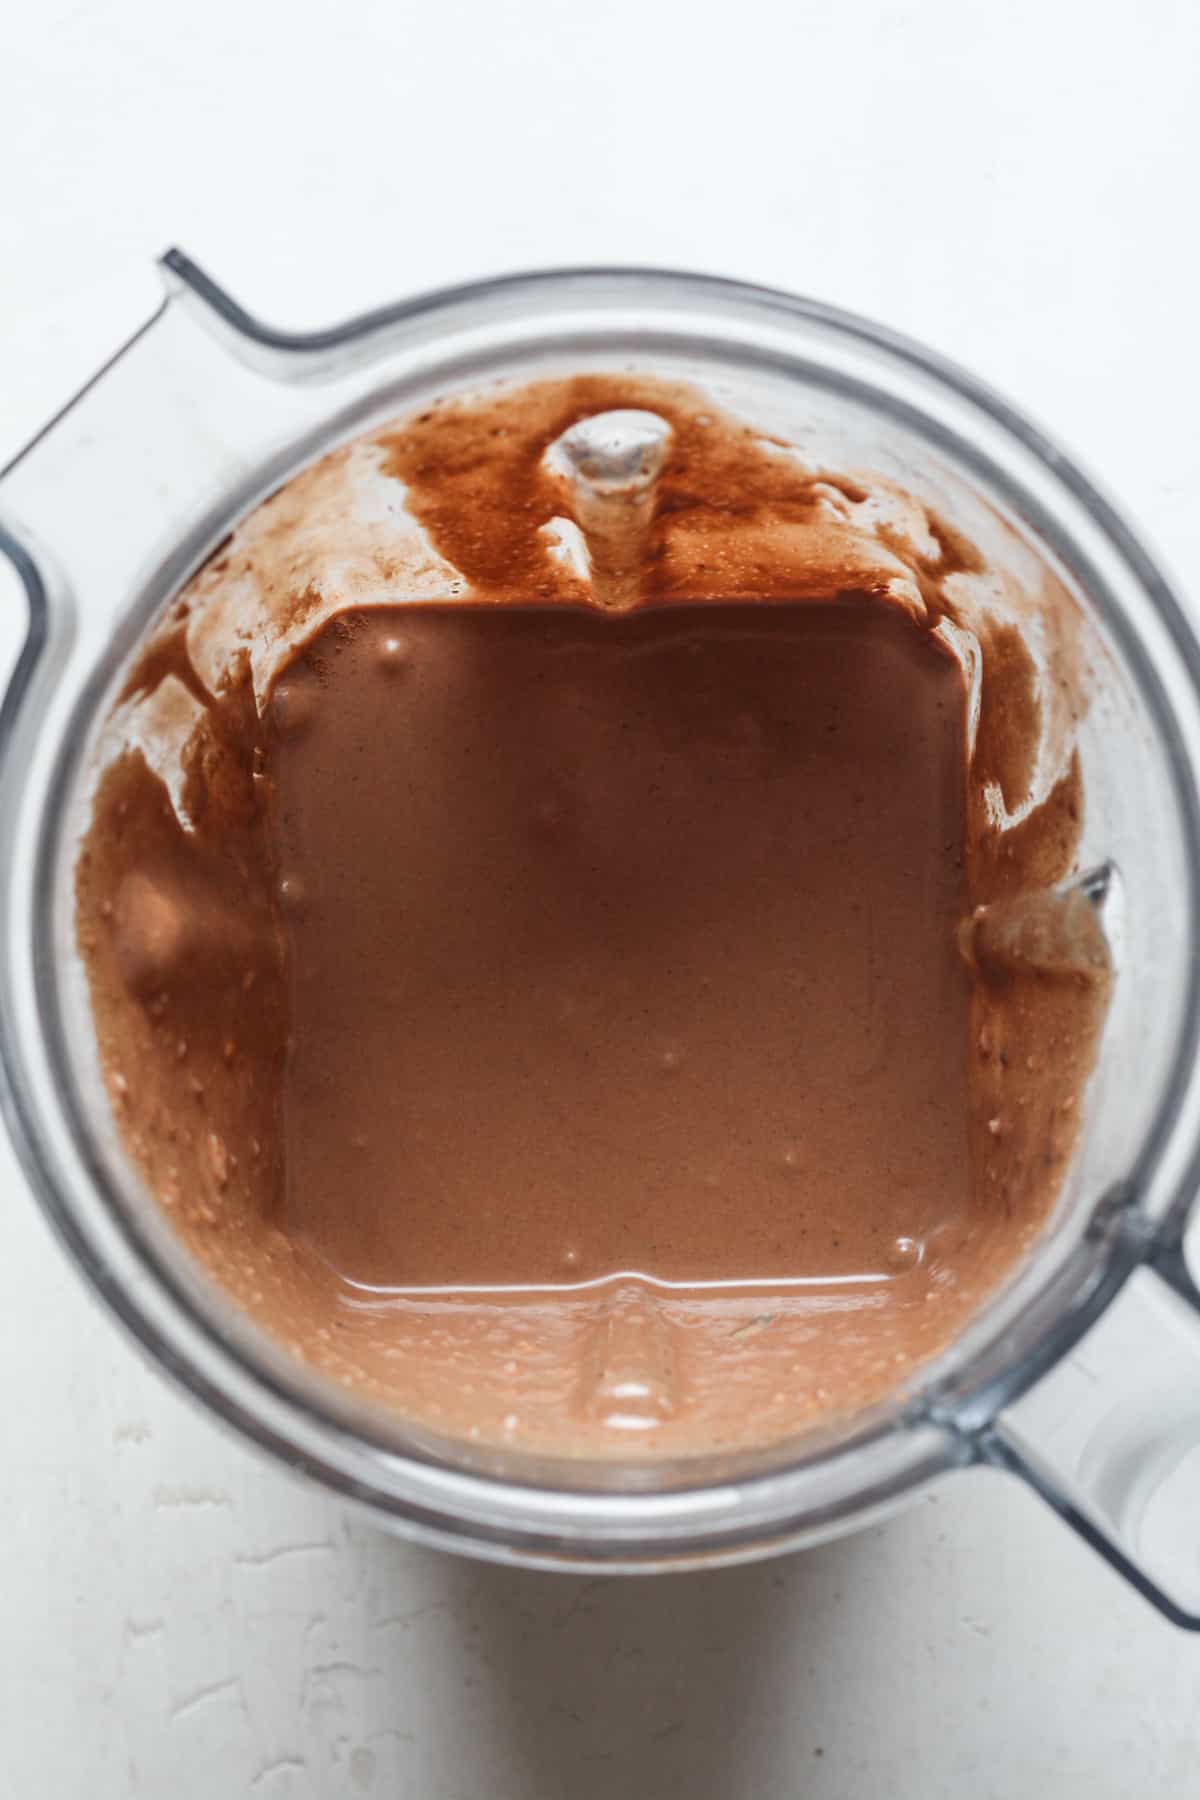 Creamy chocolate mix in blender.